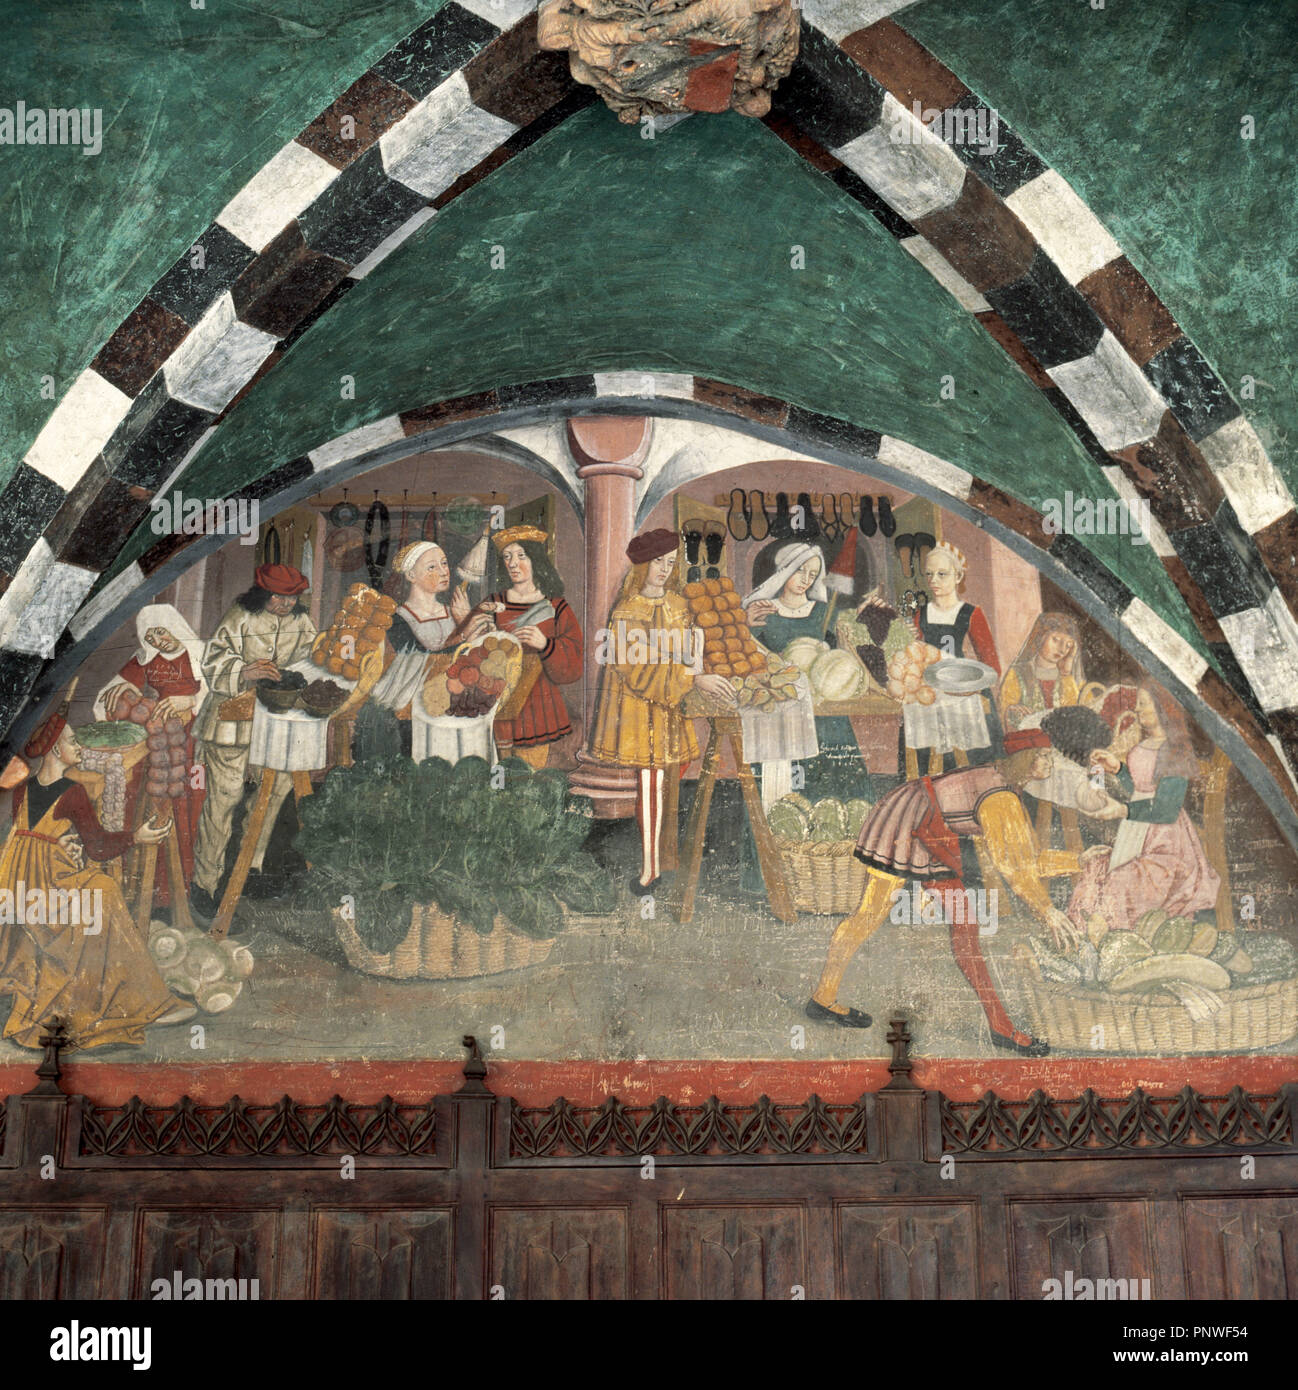 Arte renacentista castillo de Issogne. Murales. c. 1500. Representación de un mercado. Aosta Vallery. Italia. Foto de stock